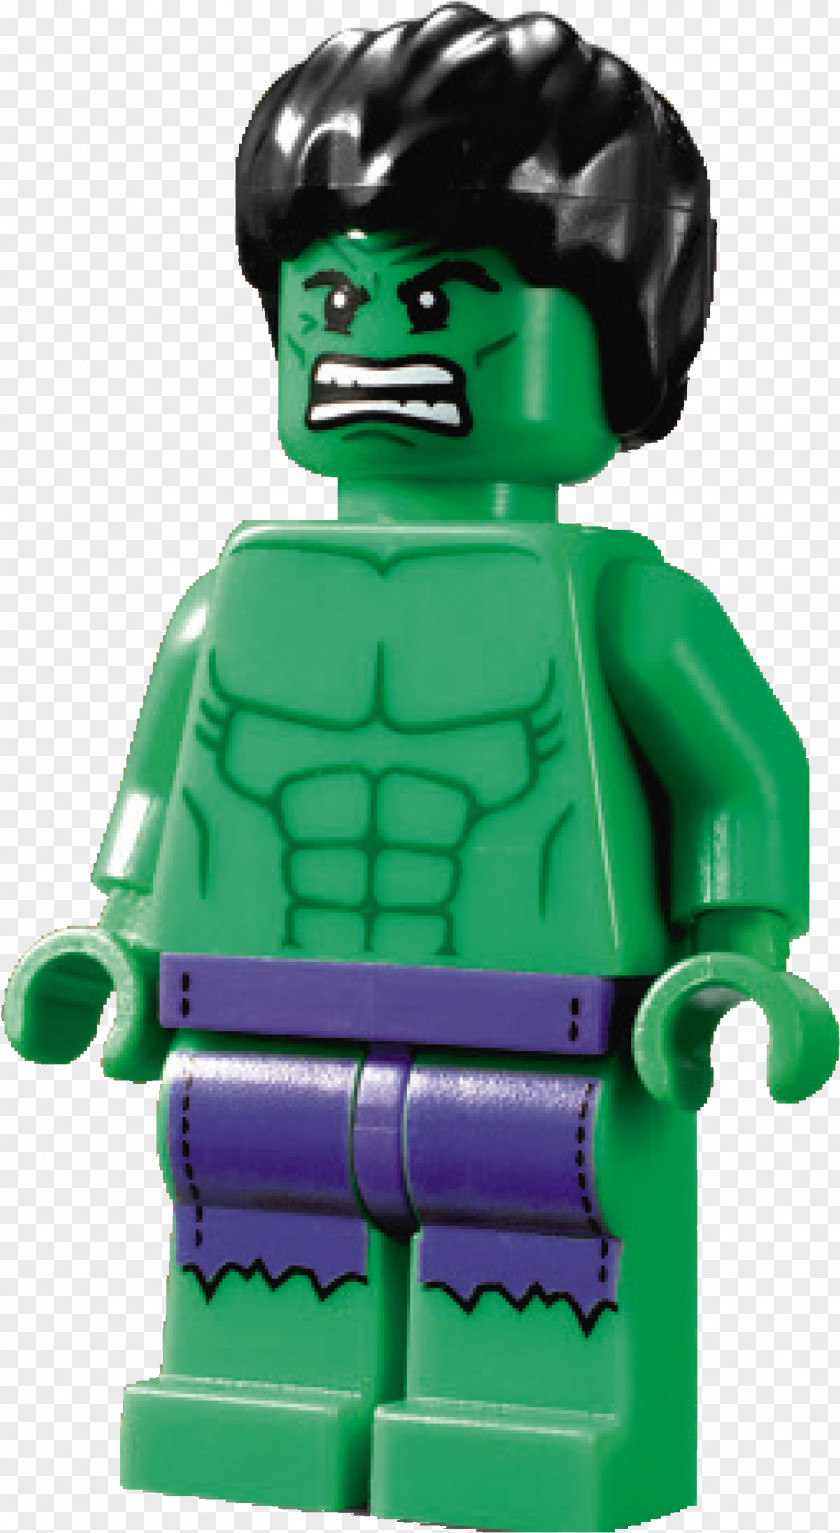 Hulk Lego Marvel Super Heroes Minifigure PNG